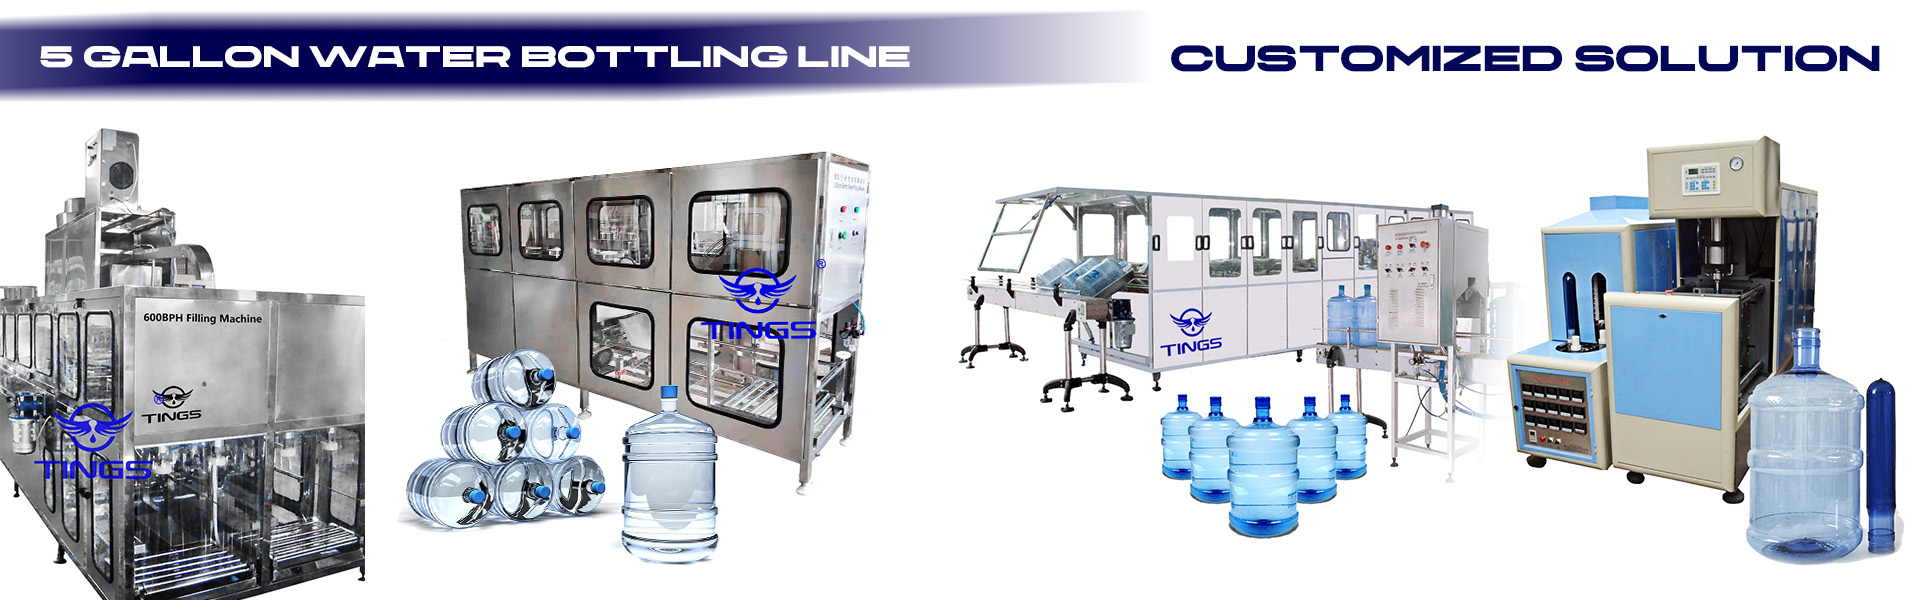 5 gallon water bottling equipment